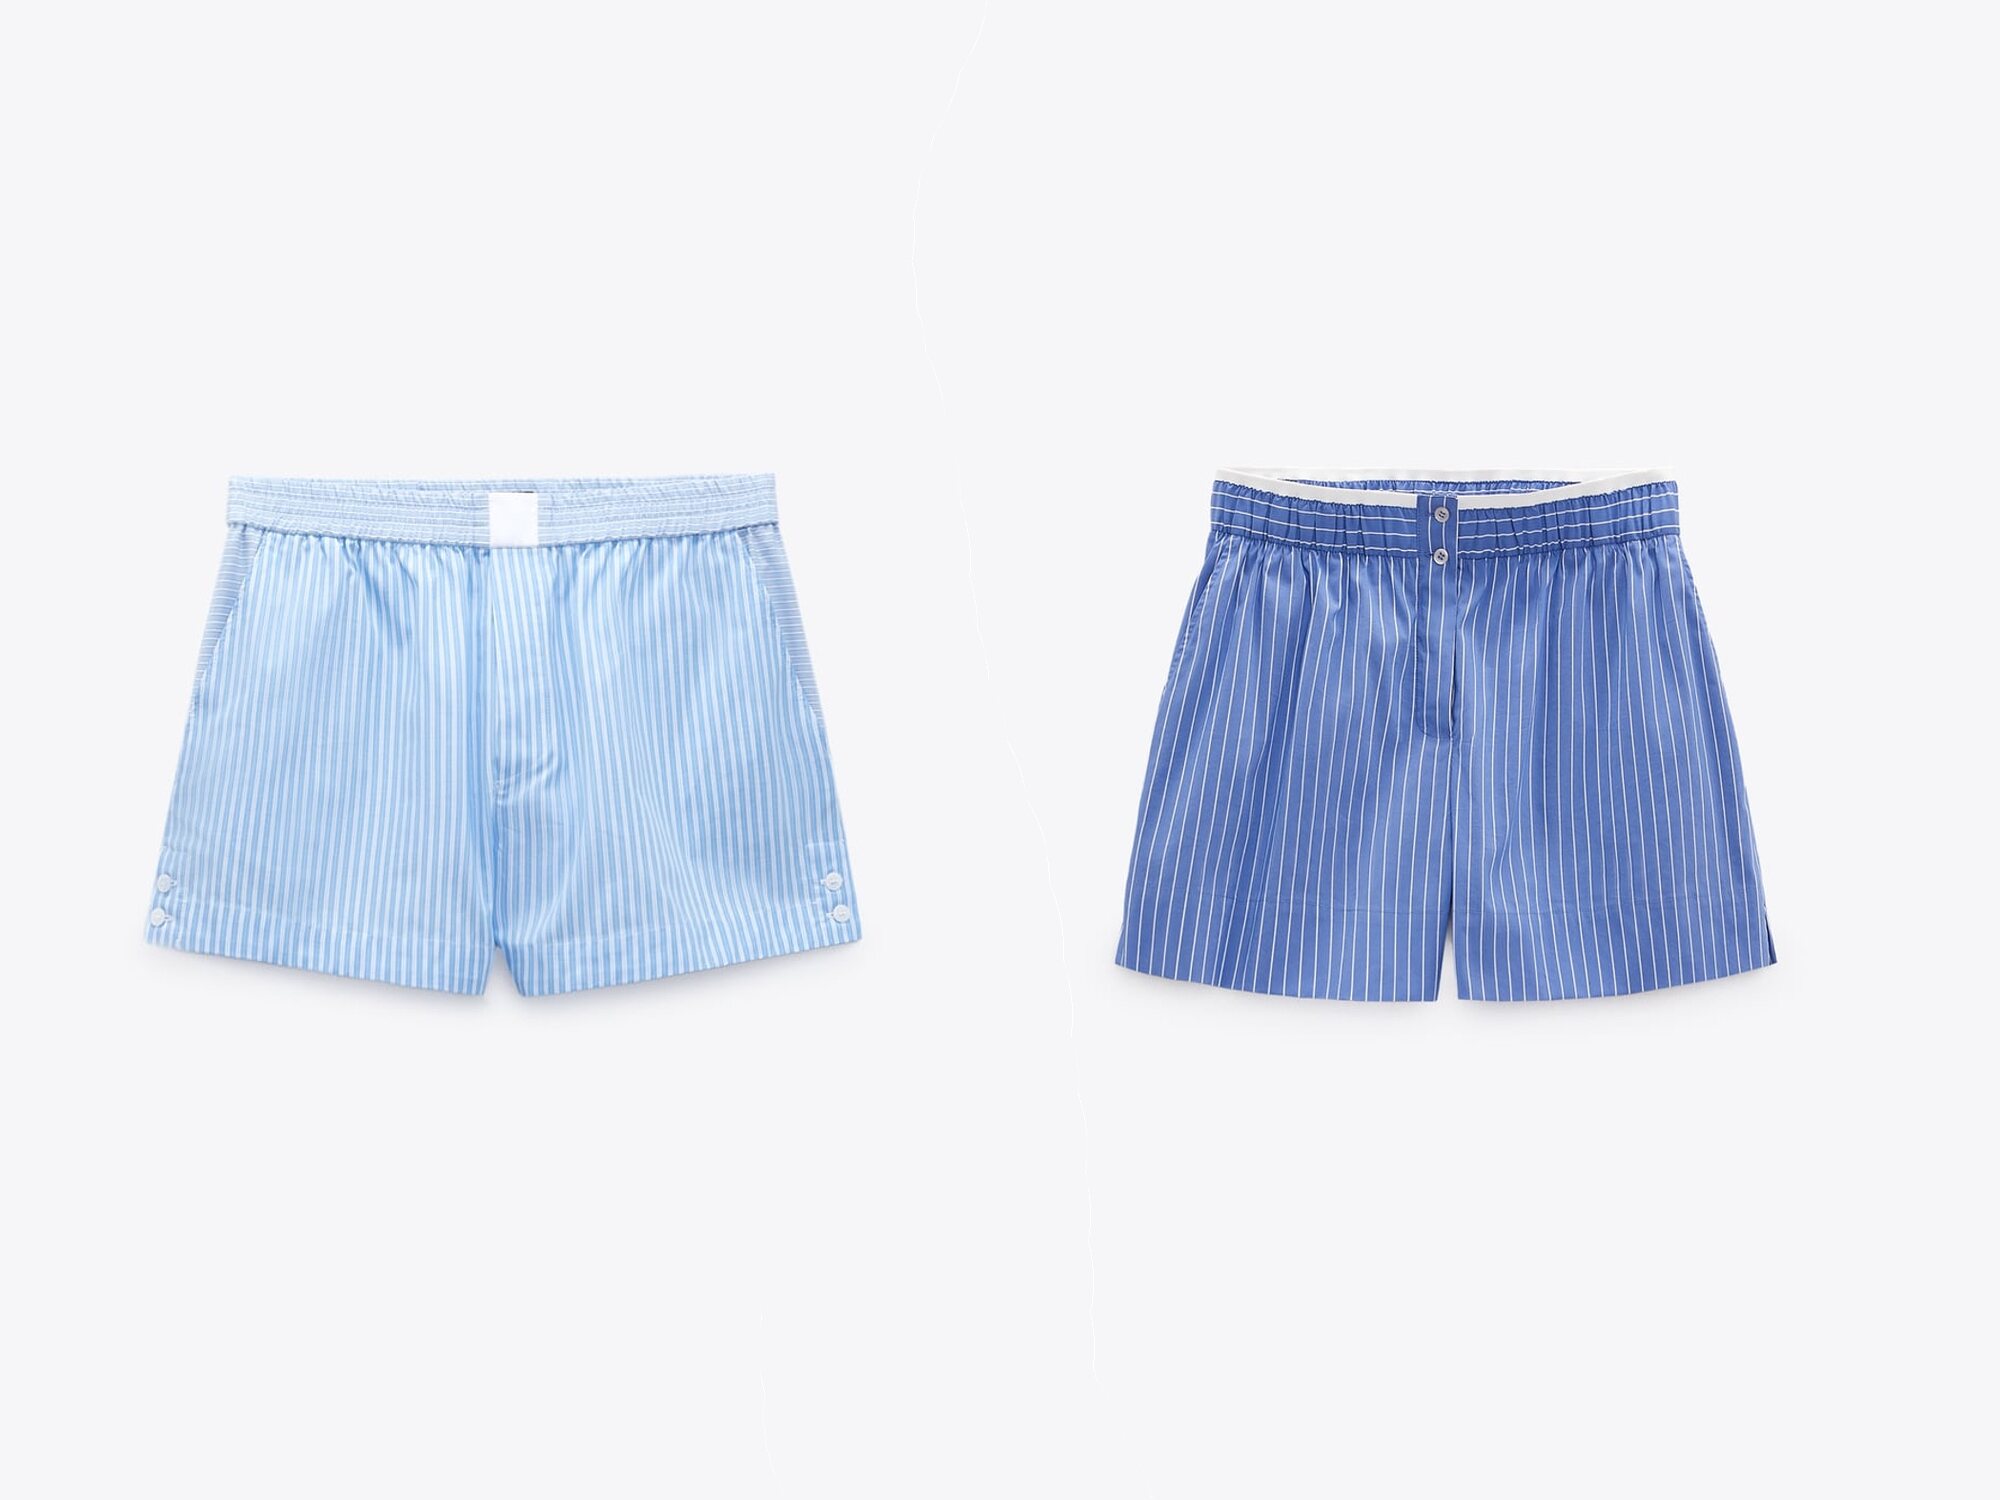 Dos modelos de pantalones cortos de Zara de la tendencia calzoncillo masculino